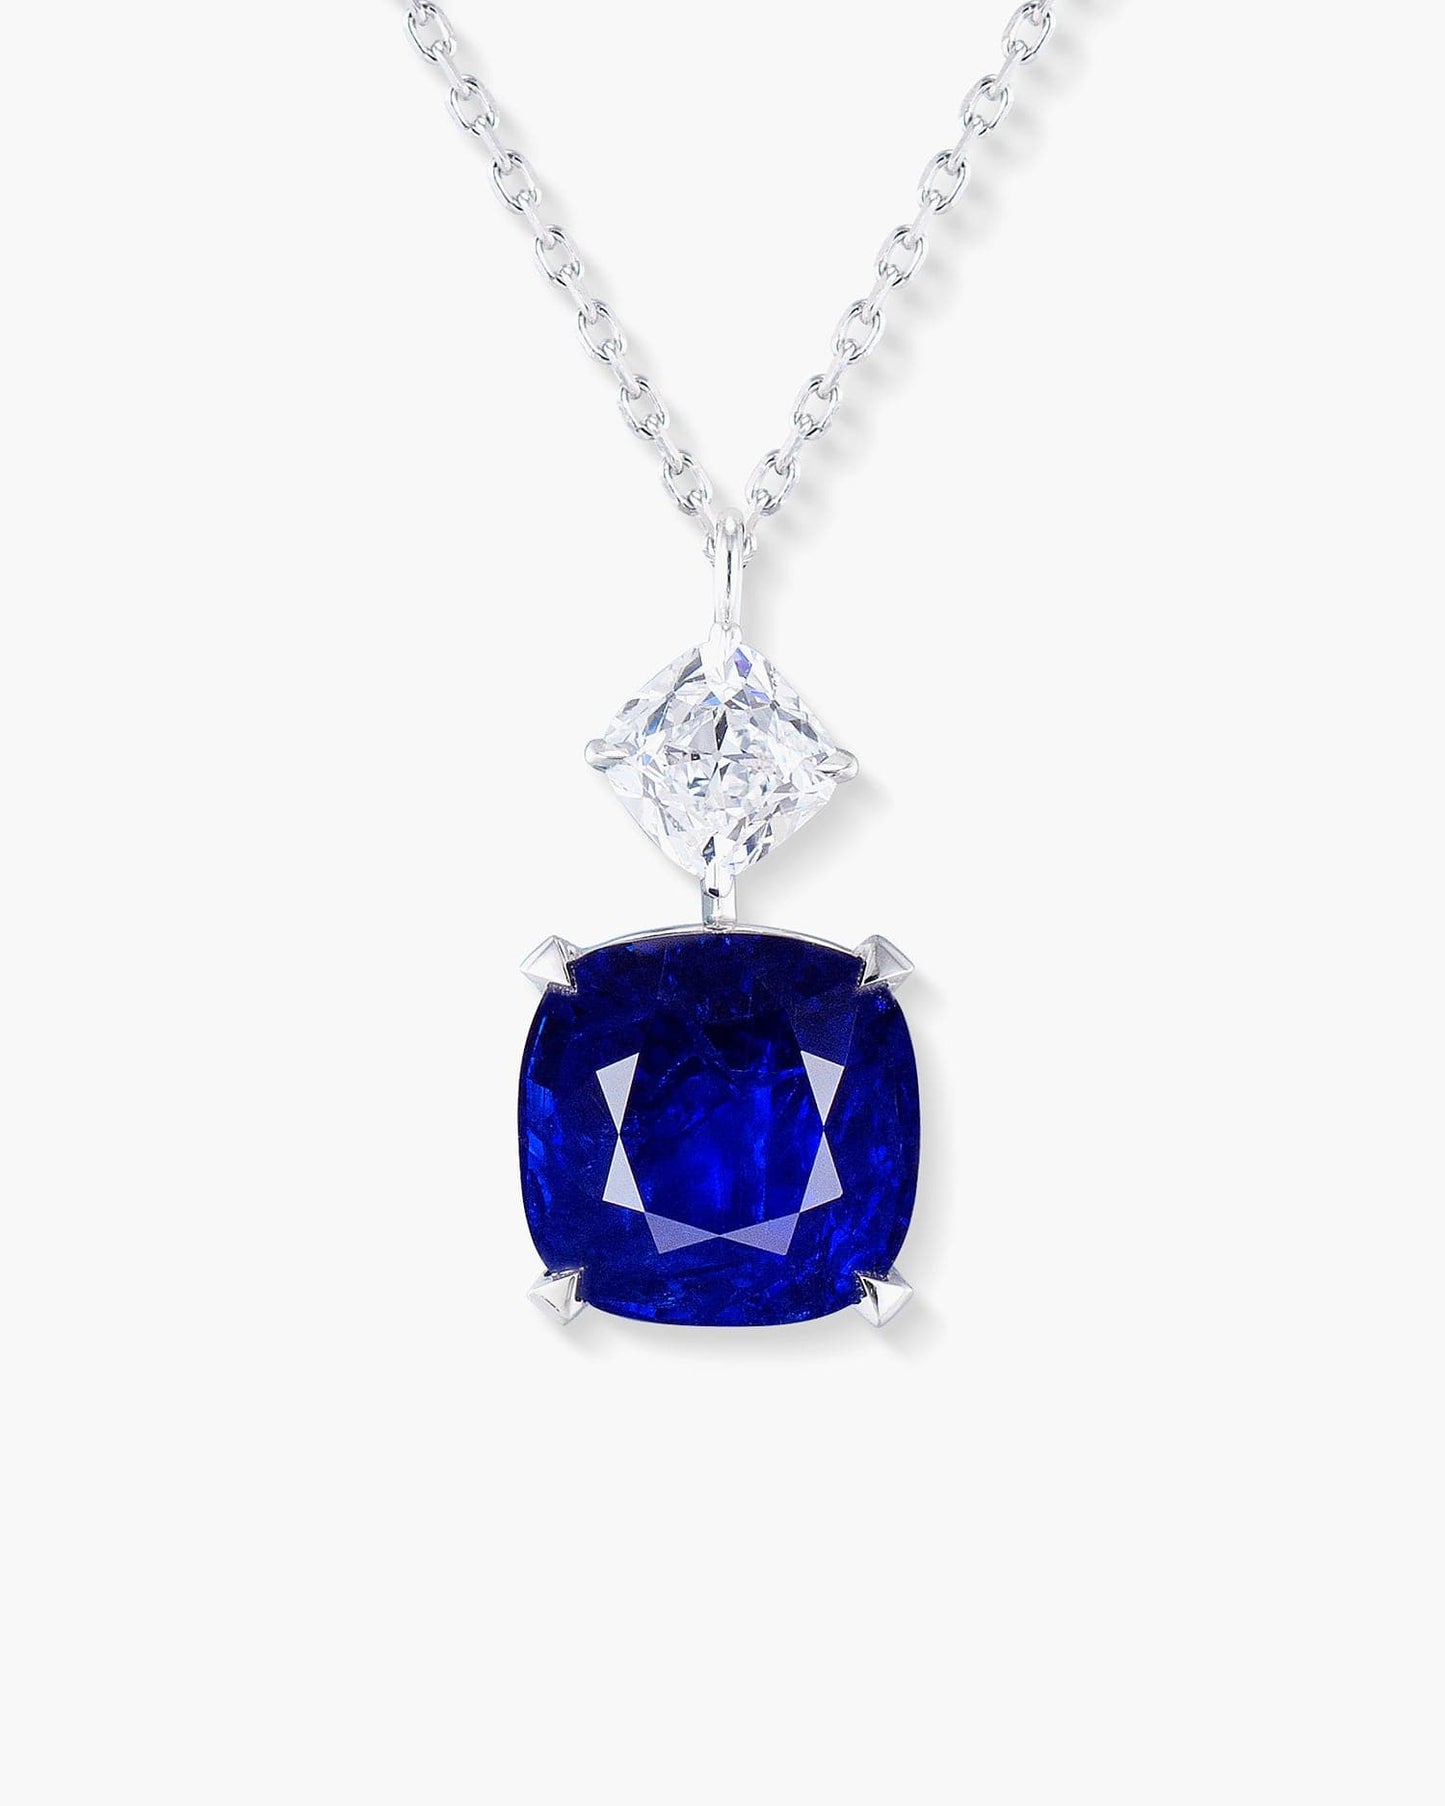 4.97 carat Cushion Cut Burmese Sapphire and Diamond Pendant Necklace